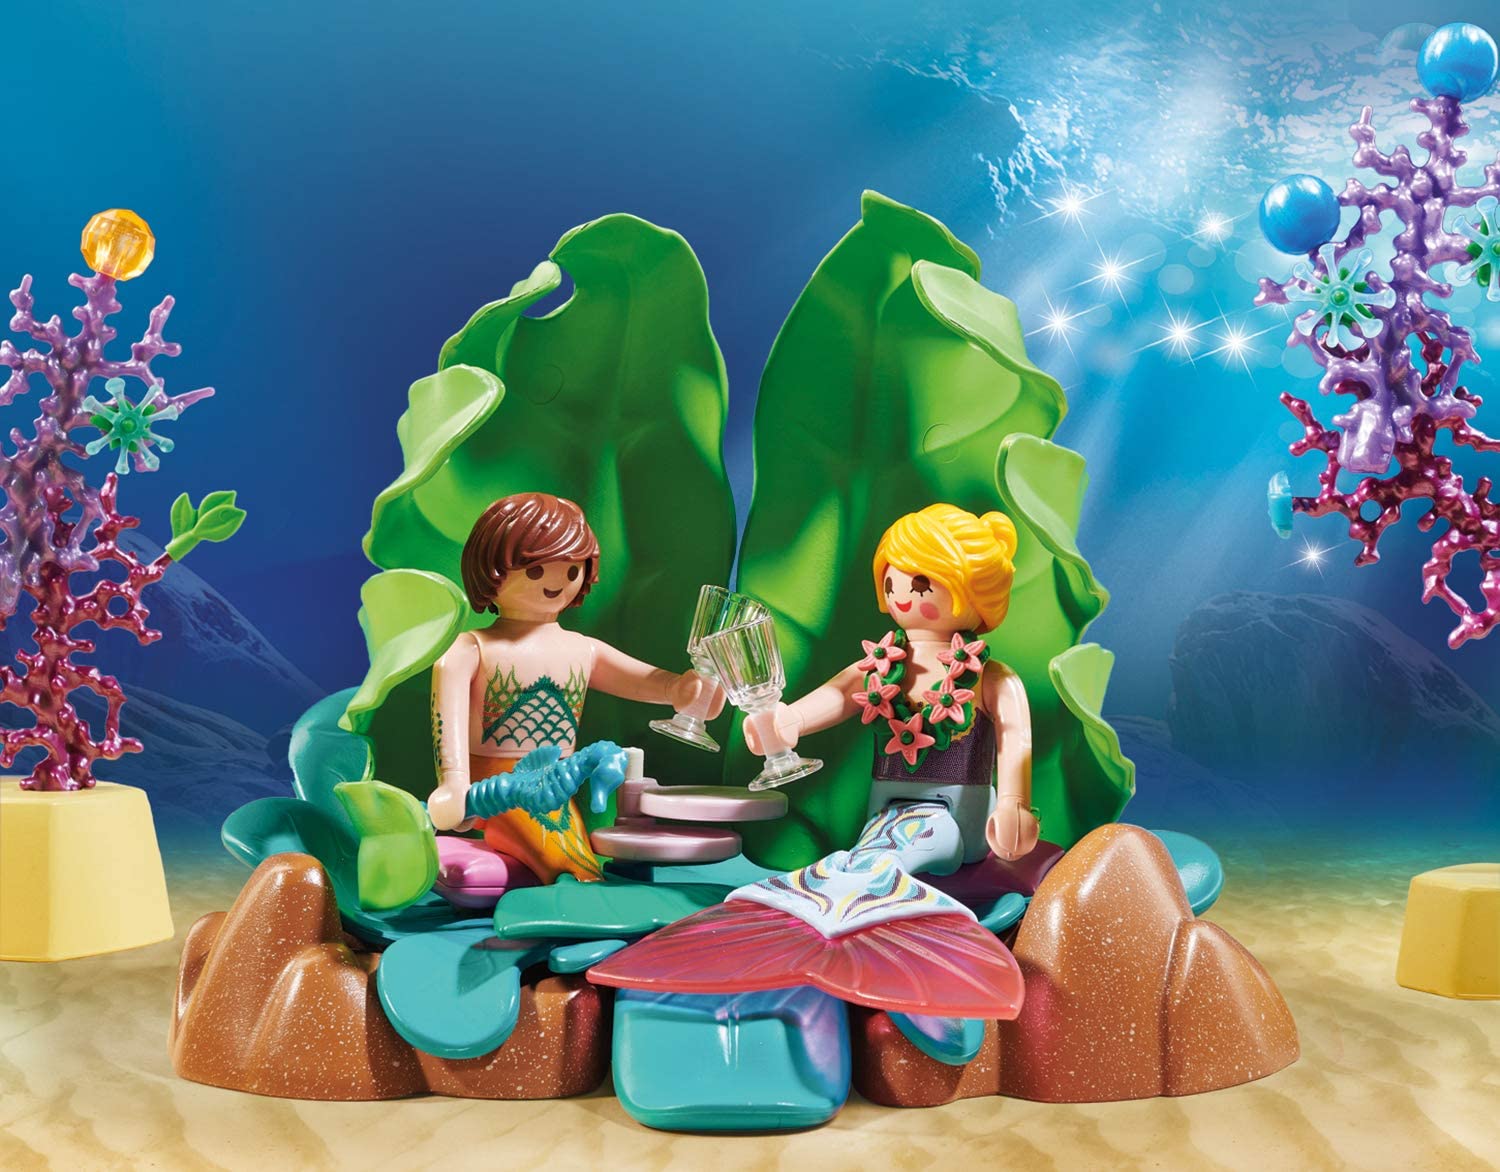 Playmobil Coral Mermaid Lounge